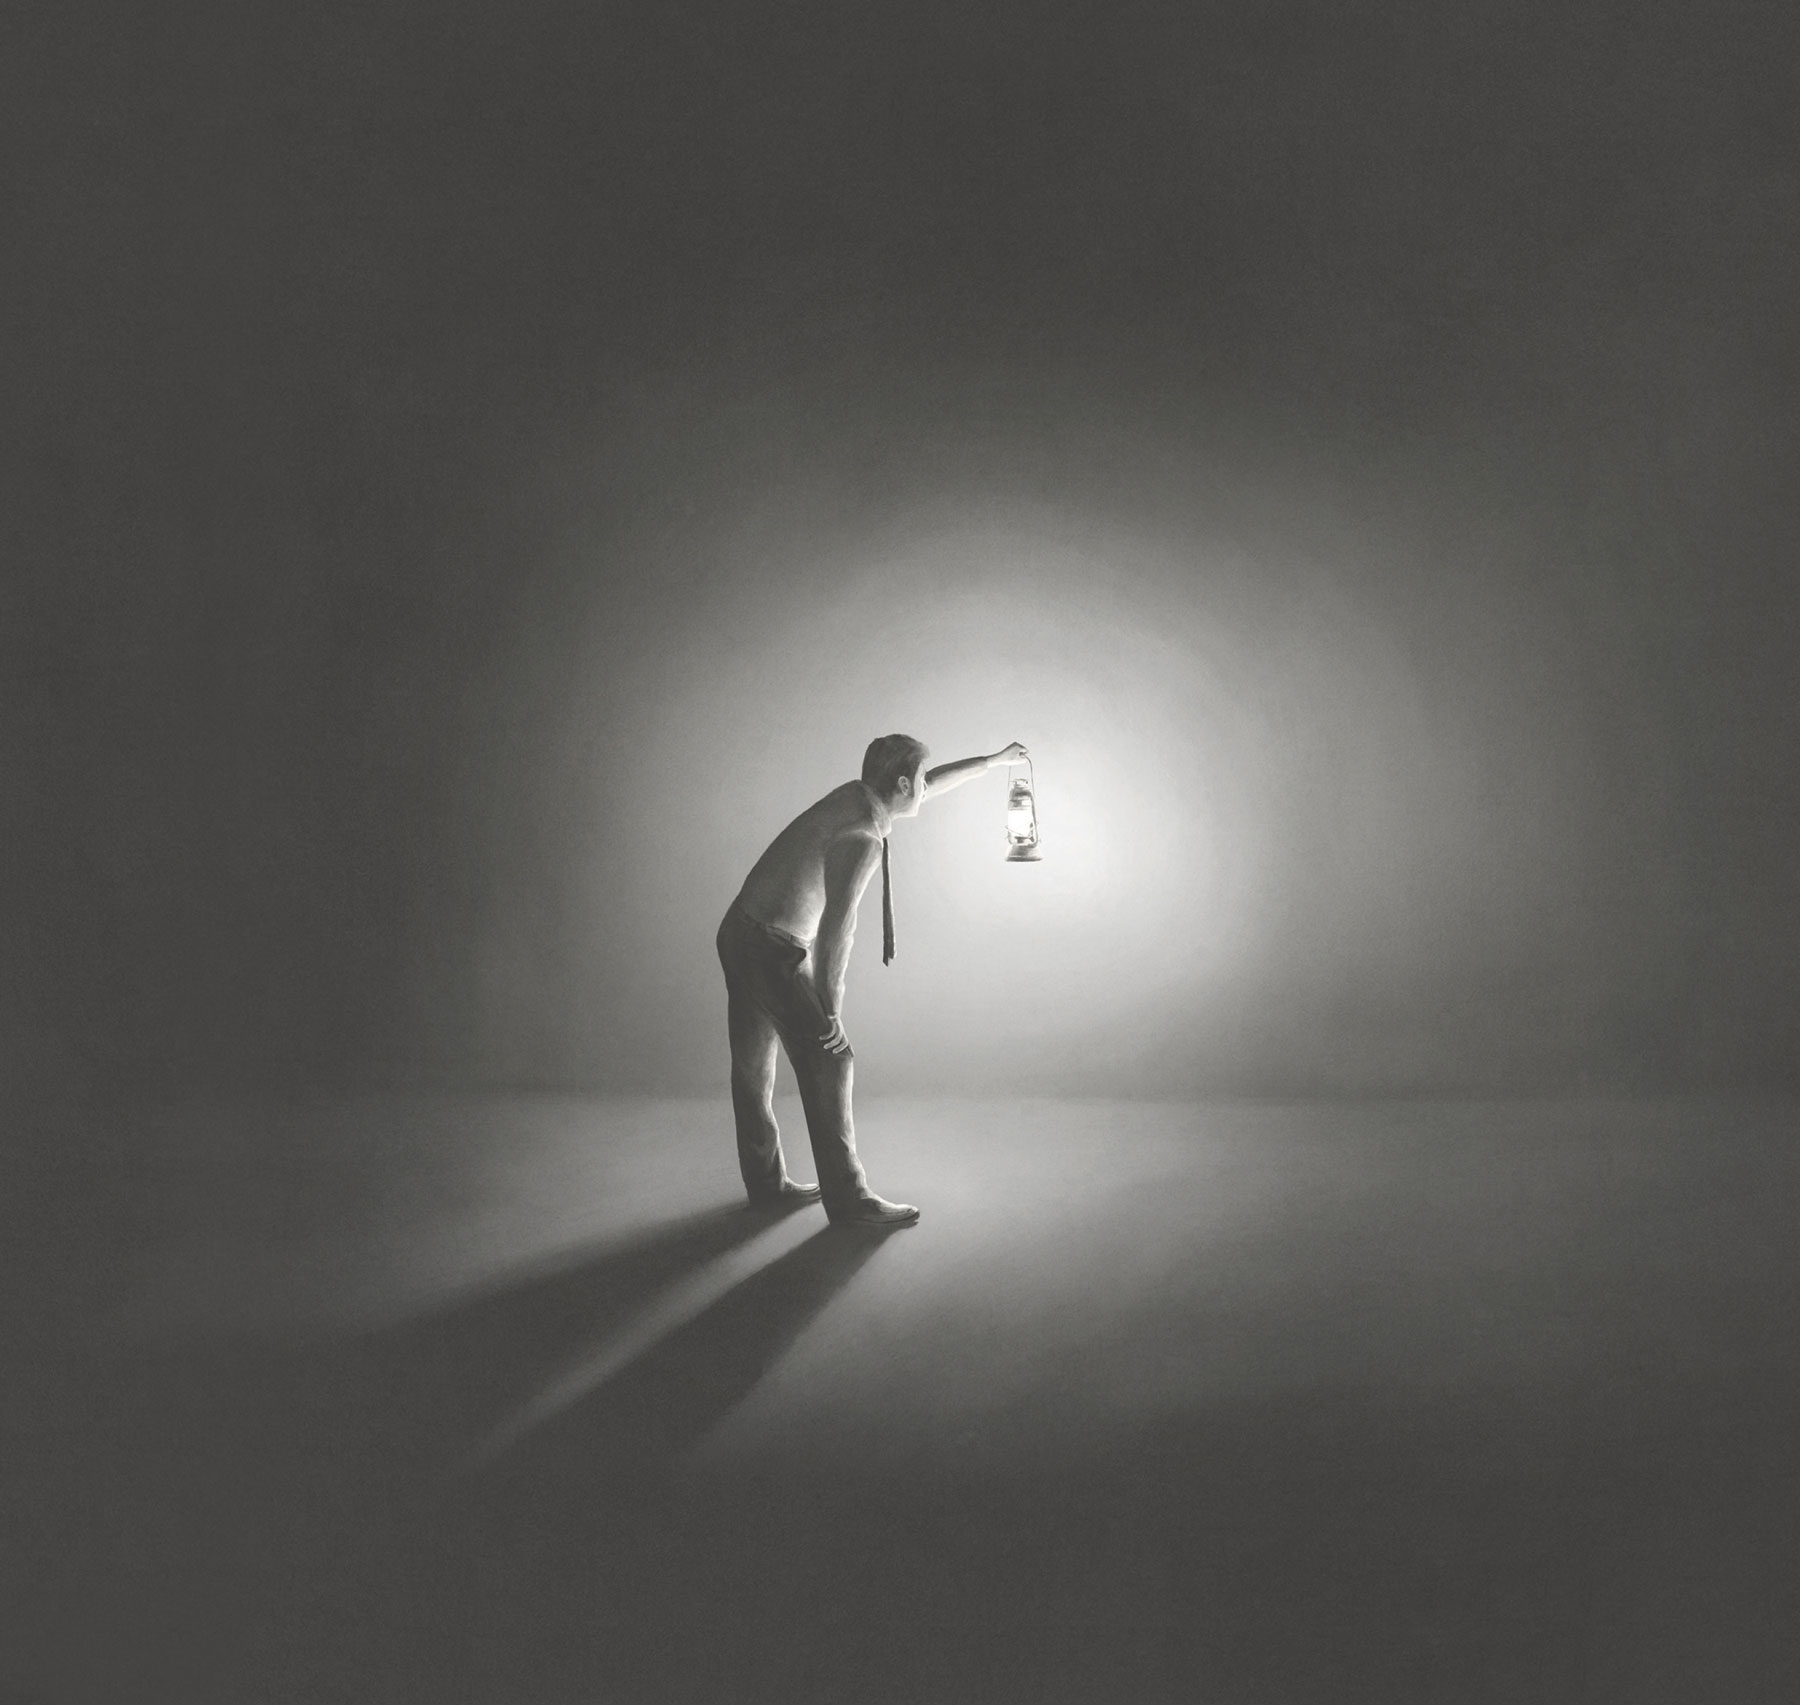 Drawing of man illuminating a dark room with a lantern